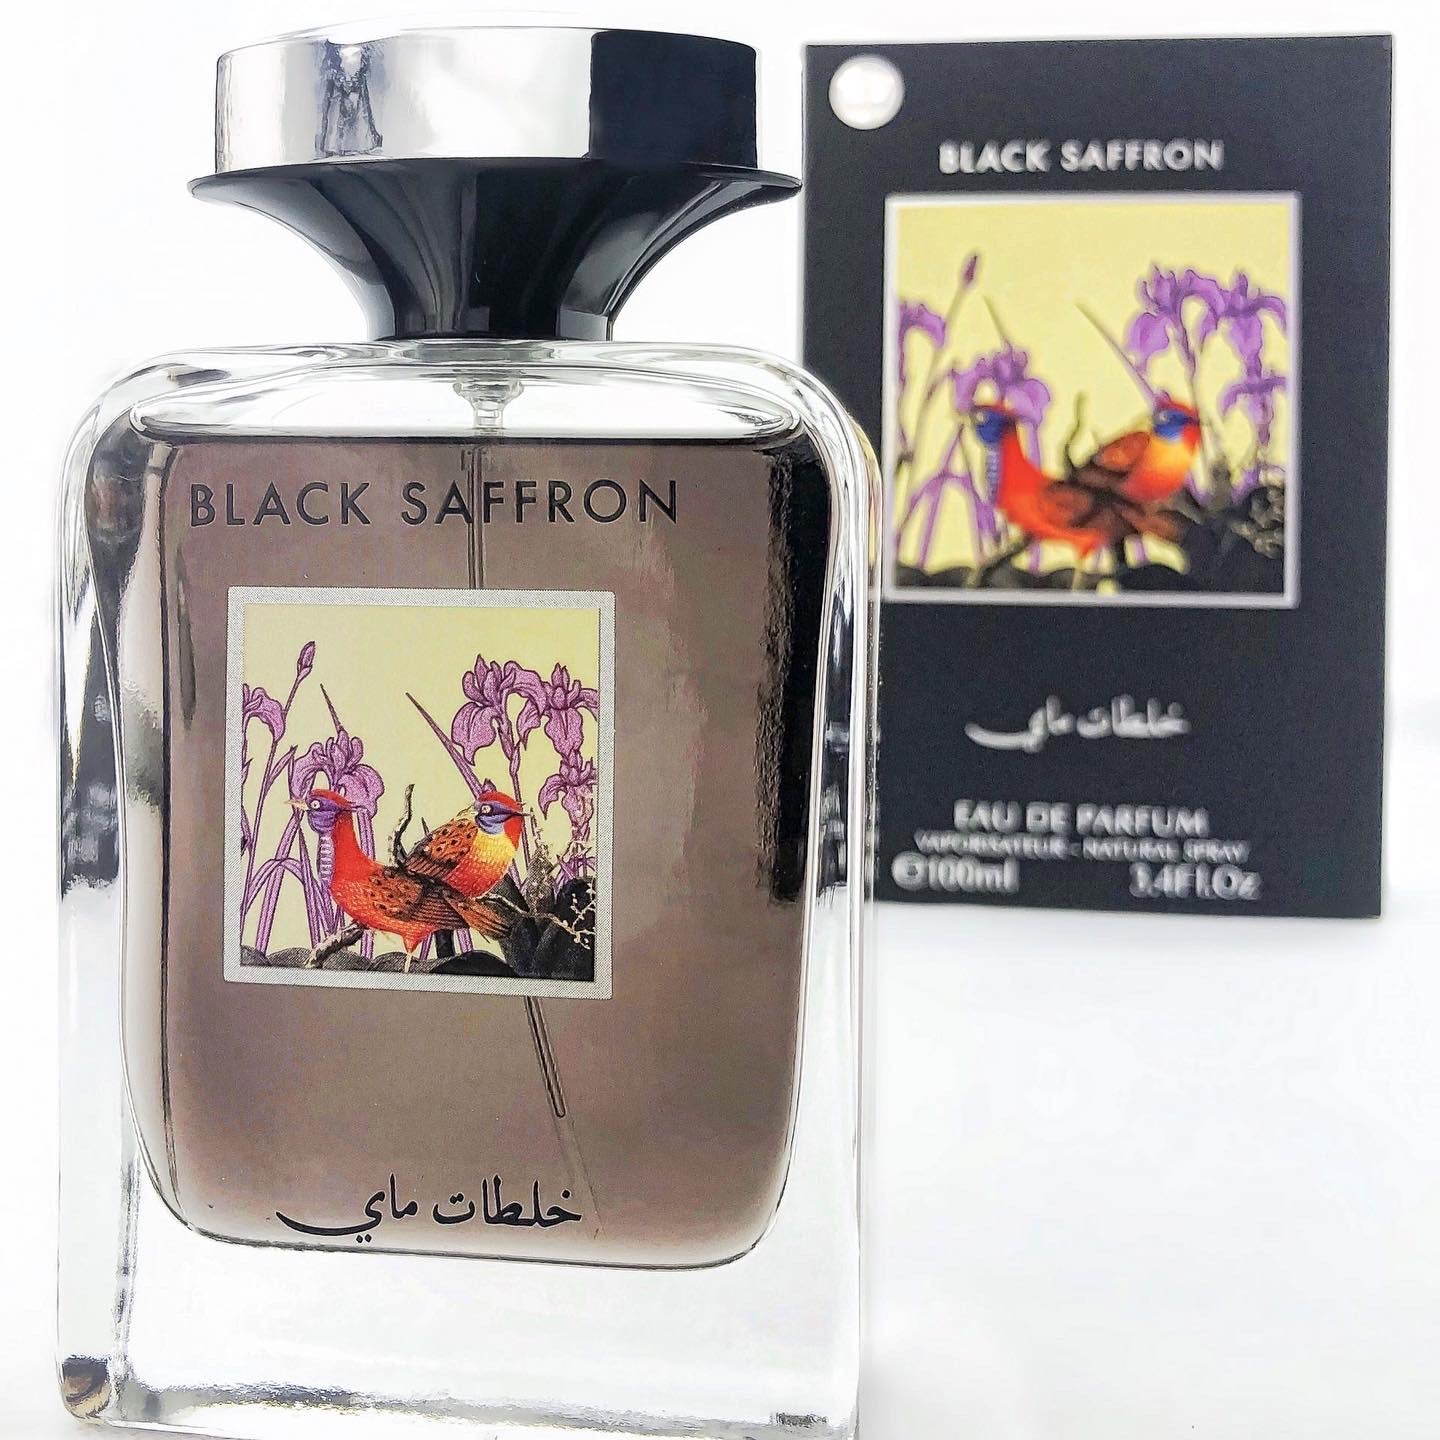 buy black saffron online, buy affordable perfume online, luxury perfumes